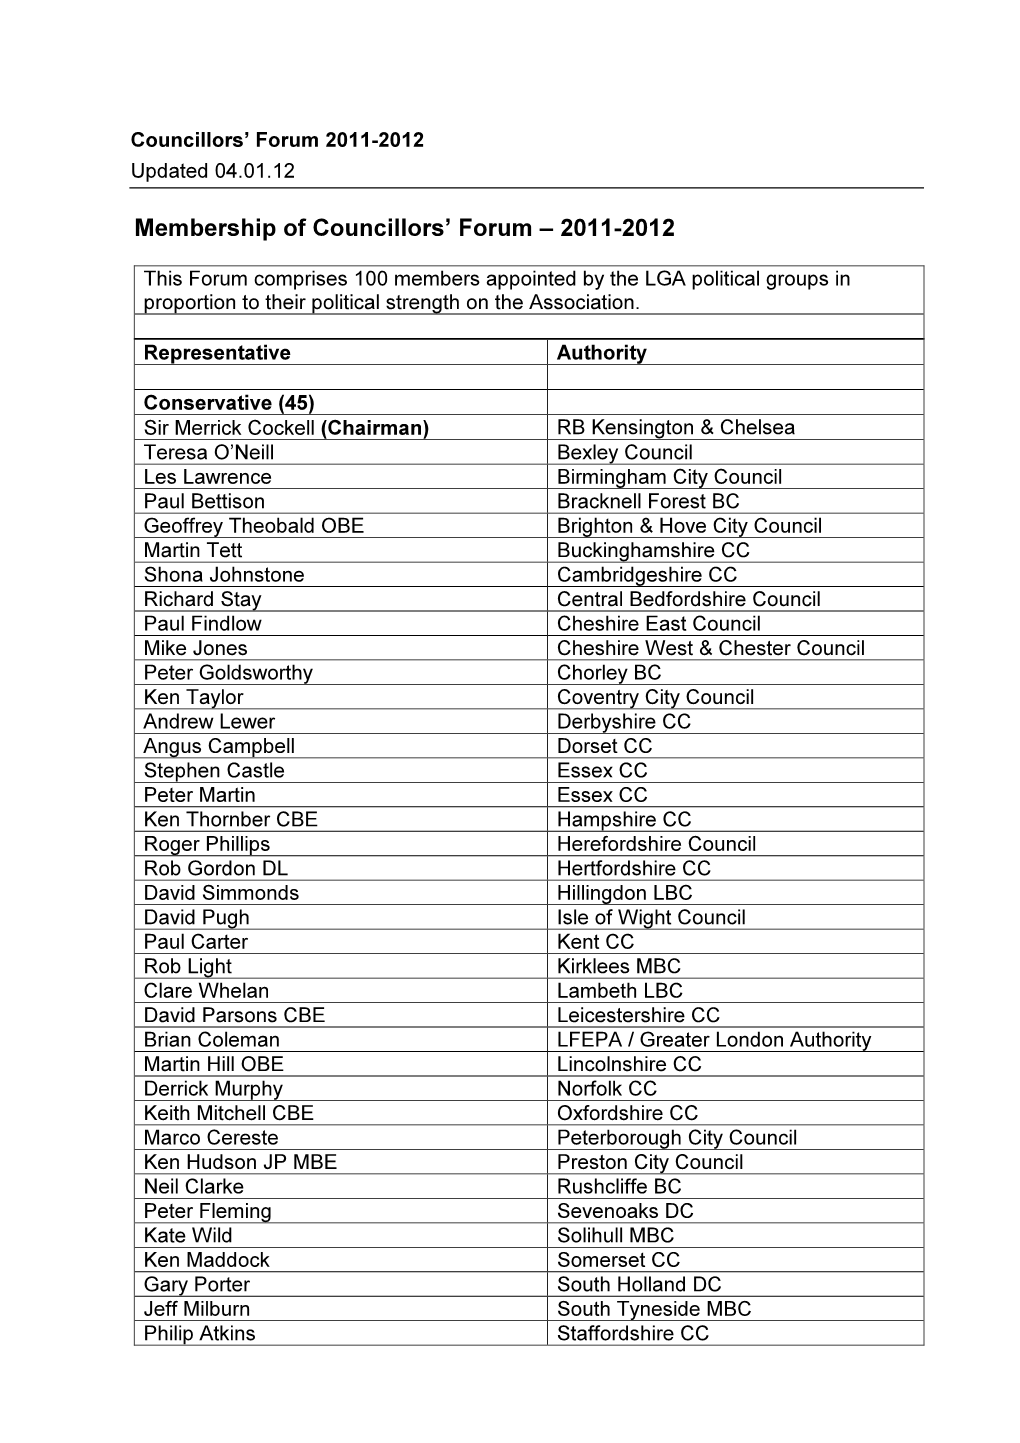 Membership of Councillors' Forum – 2011-2012